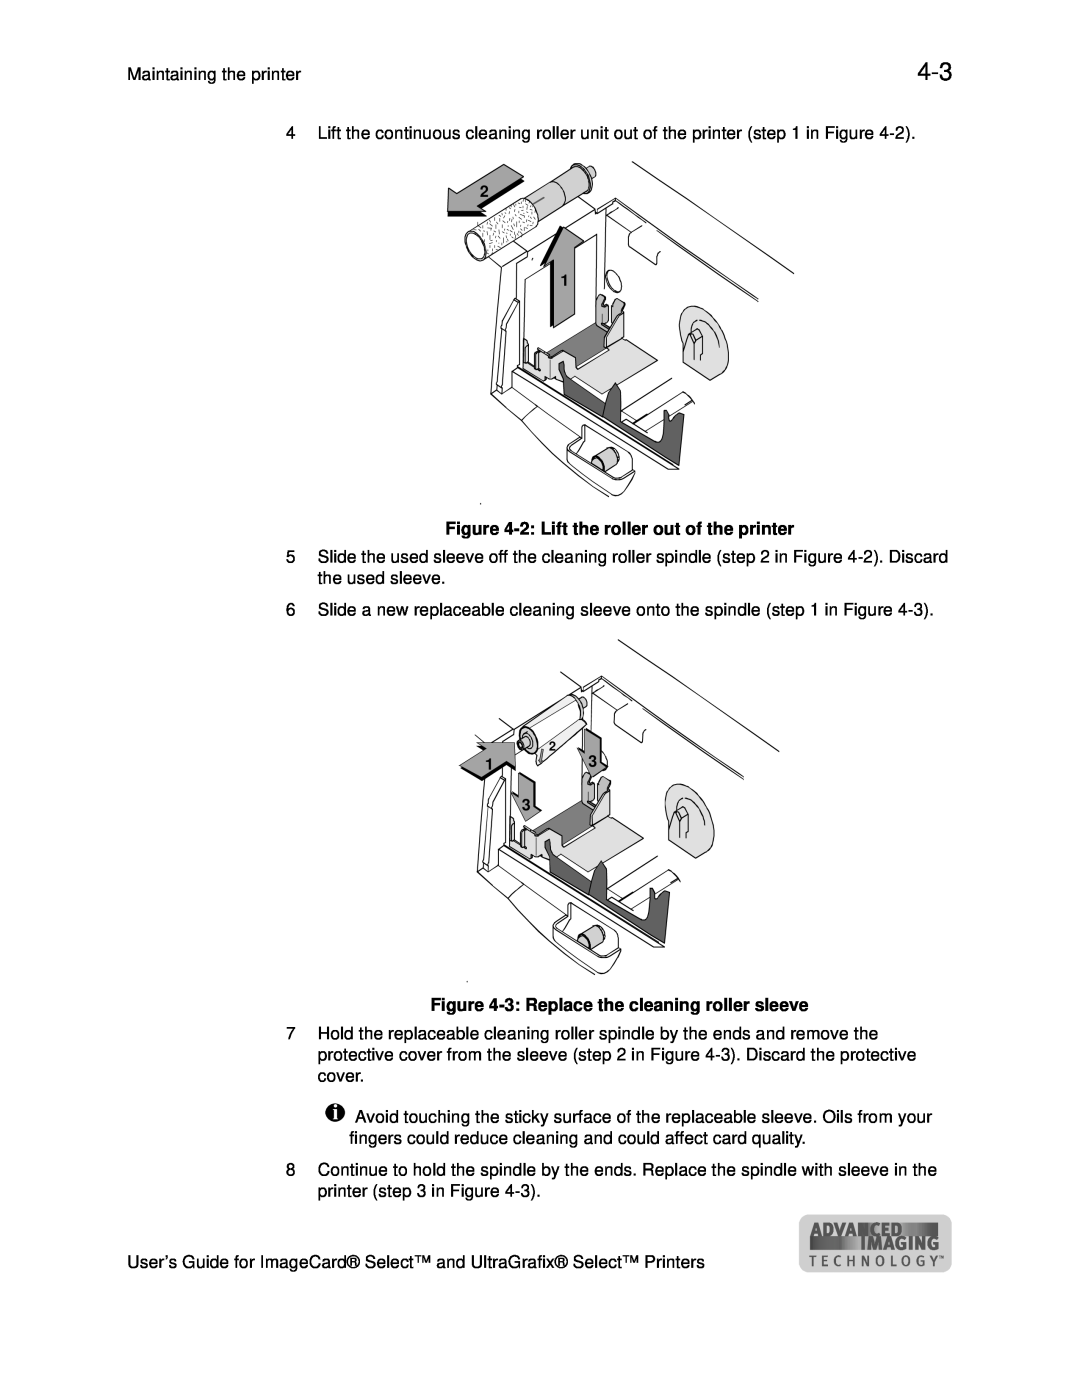 Datacard Group ImageCard SelectTM and UltraGrafix SelectTM Printers manual 2 Lift the roller out of the printer 